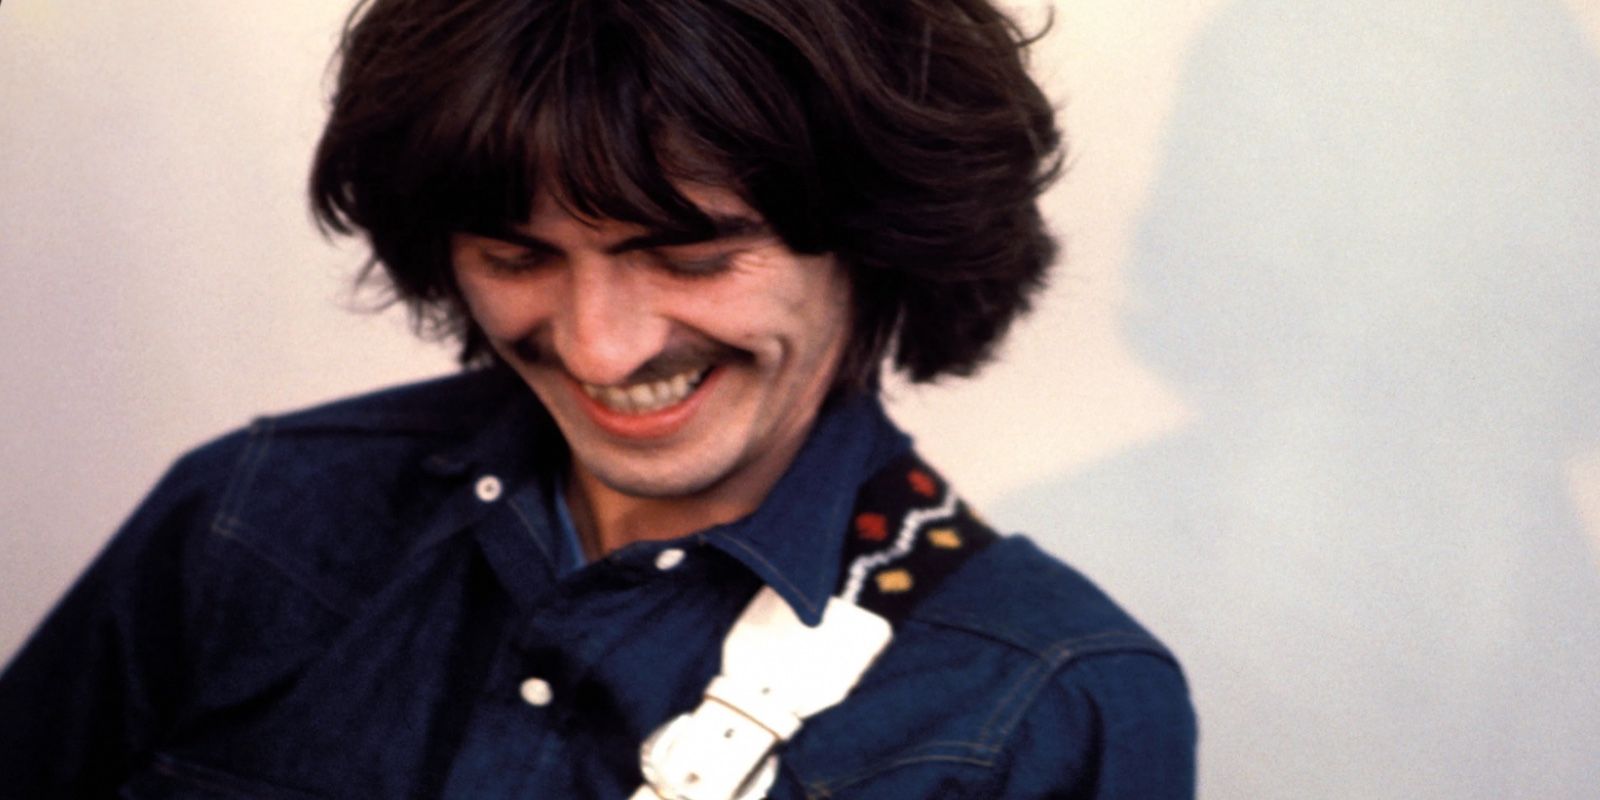 George grins as he plays in The Beatles: Get Back